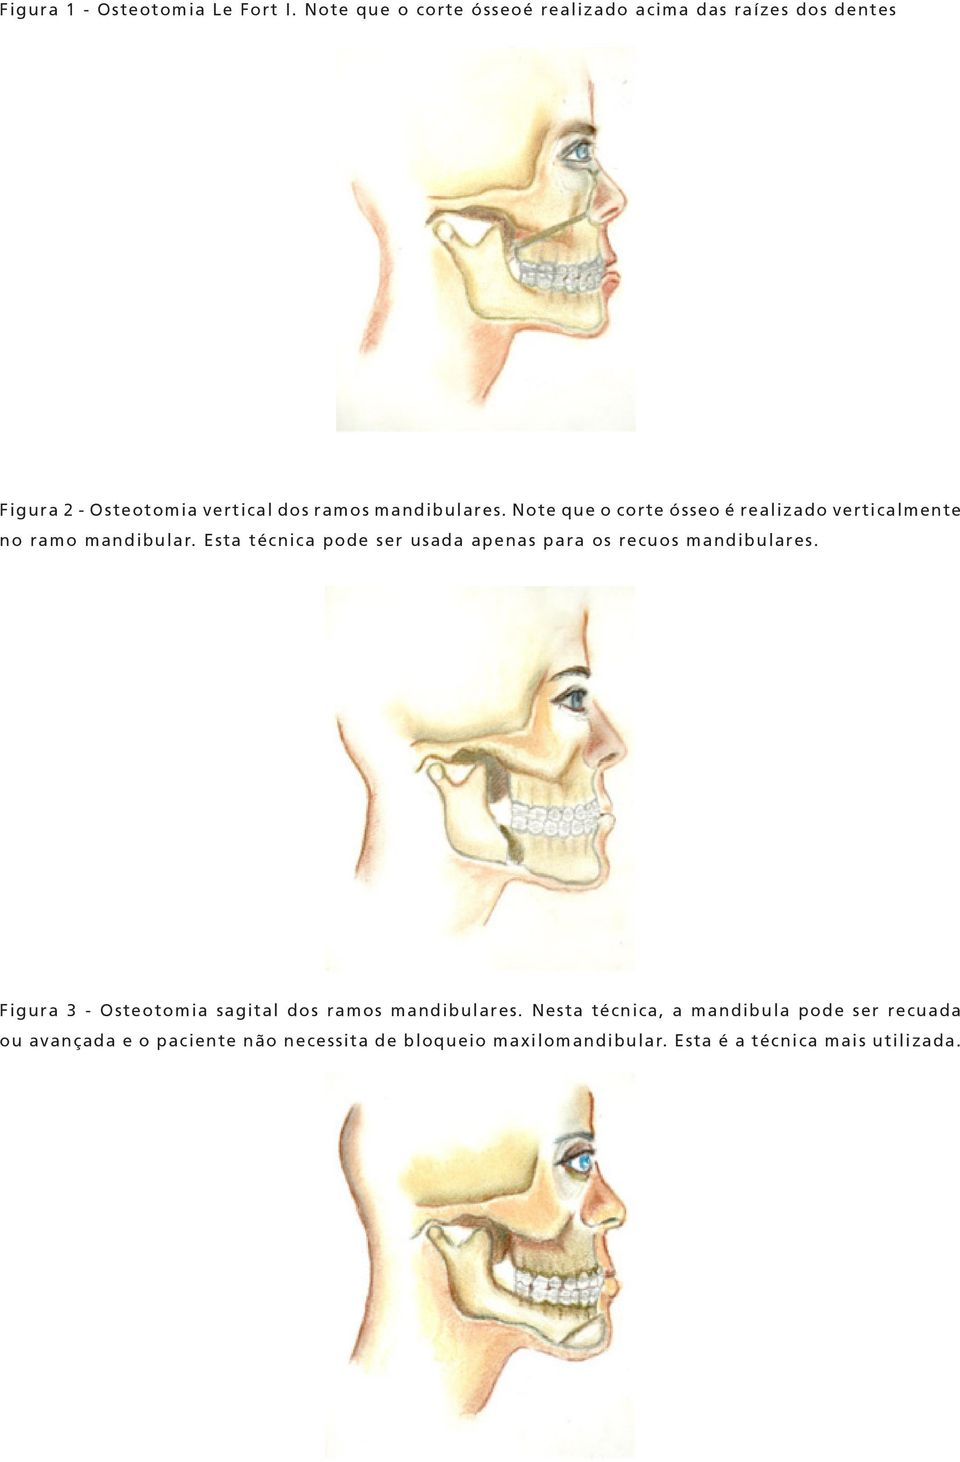 Note que o corte ósseo é realizado verticalmente no ramo mandibular.